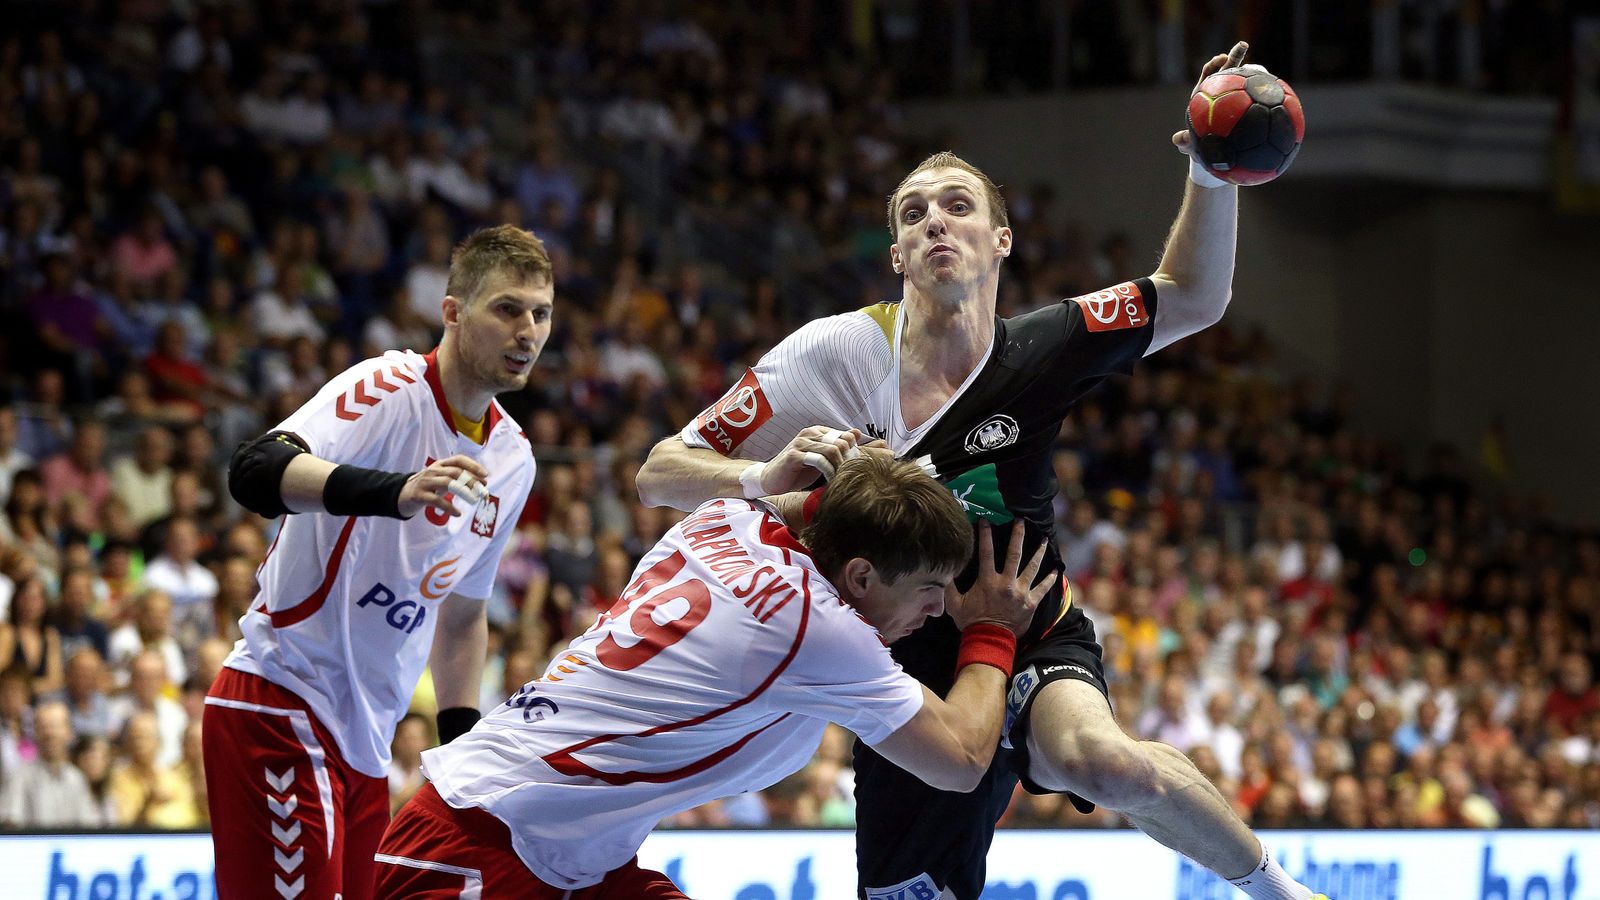 Handball World Championship 2015 fixtures and results News News Sky